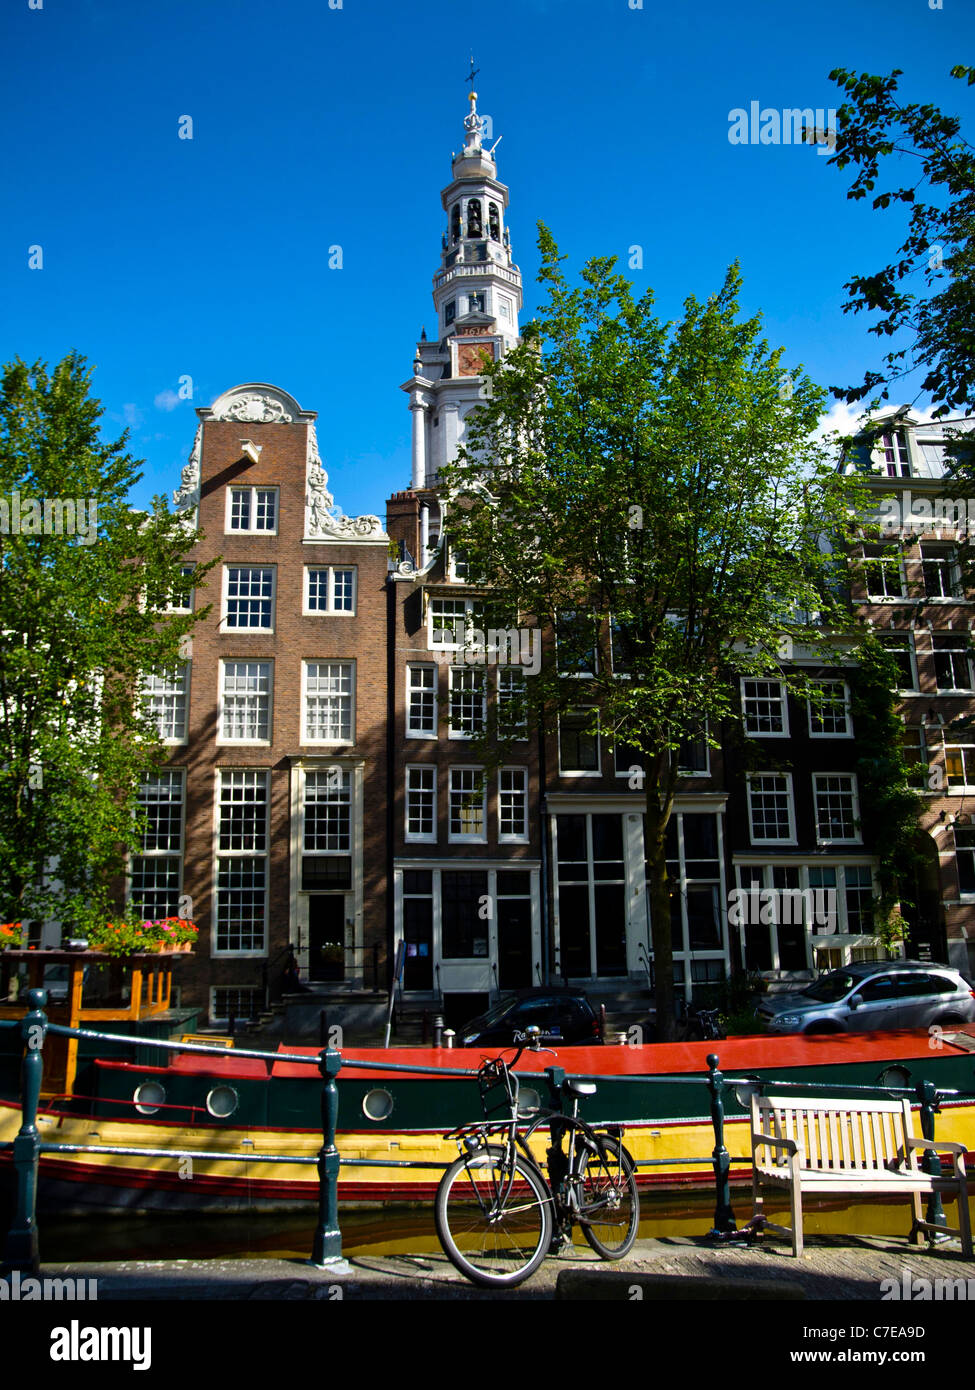 Zuiderkerk, vu de l'Raamgracht dans le vieux centre d'Amsterdam. Banque D'Images